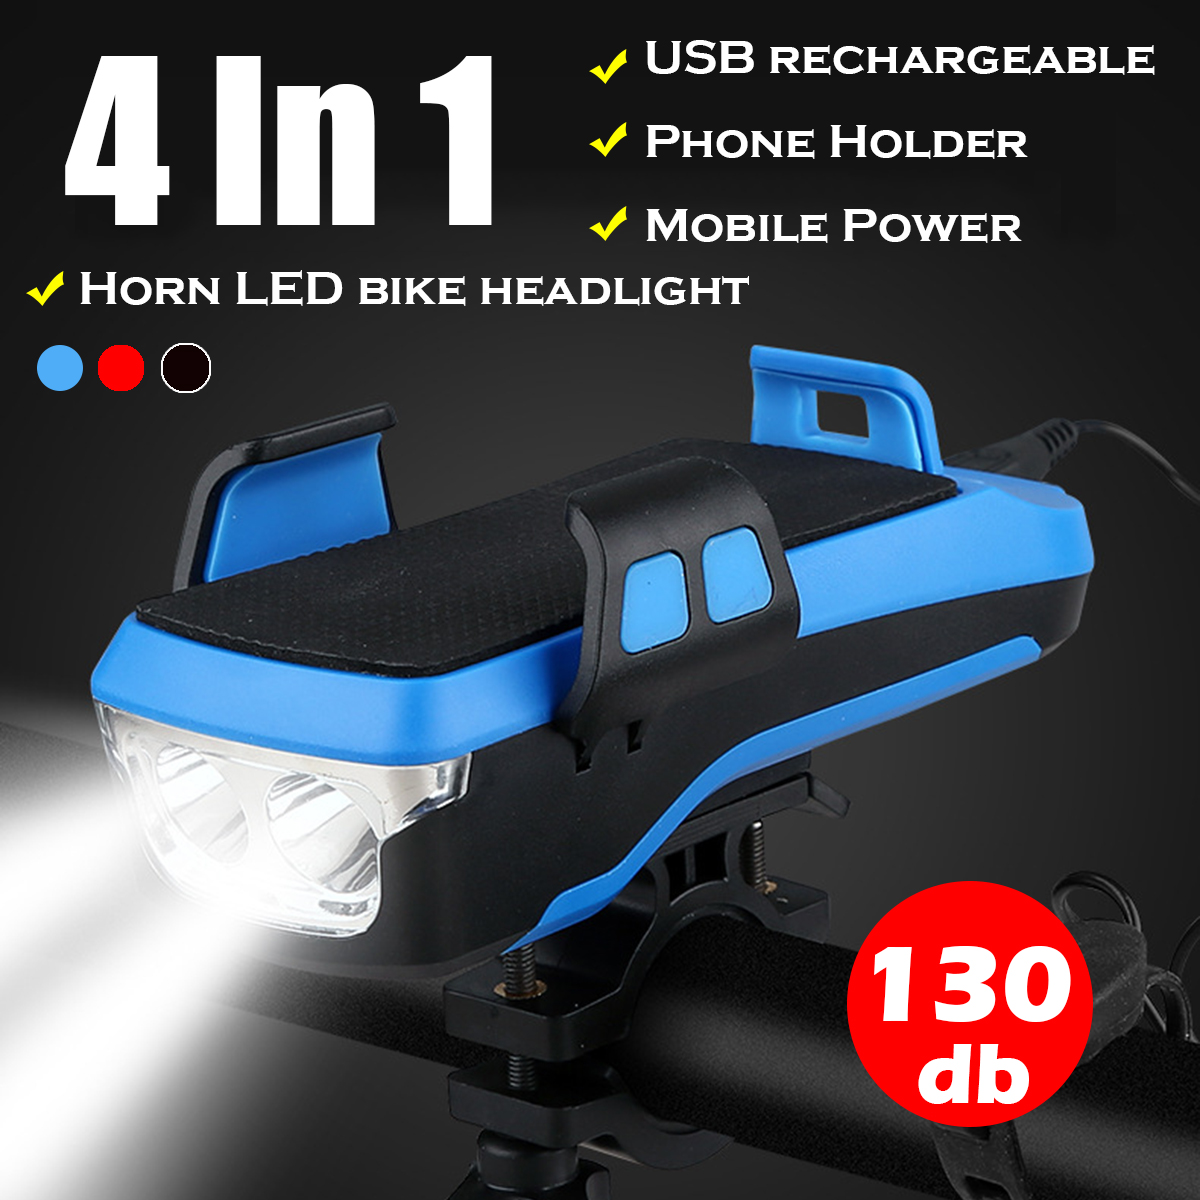 Bike Motorbike LED Lamp Light Power Bank Phone Holder for Smart Phone for iPhone Huawei 